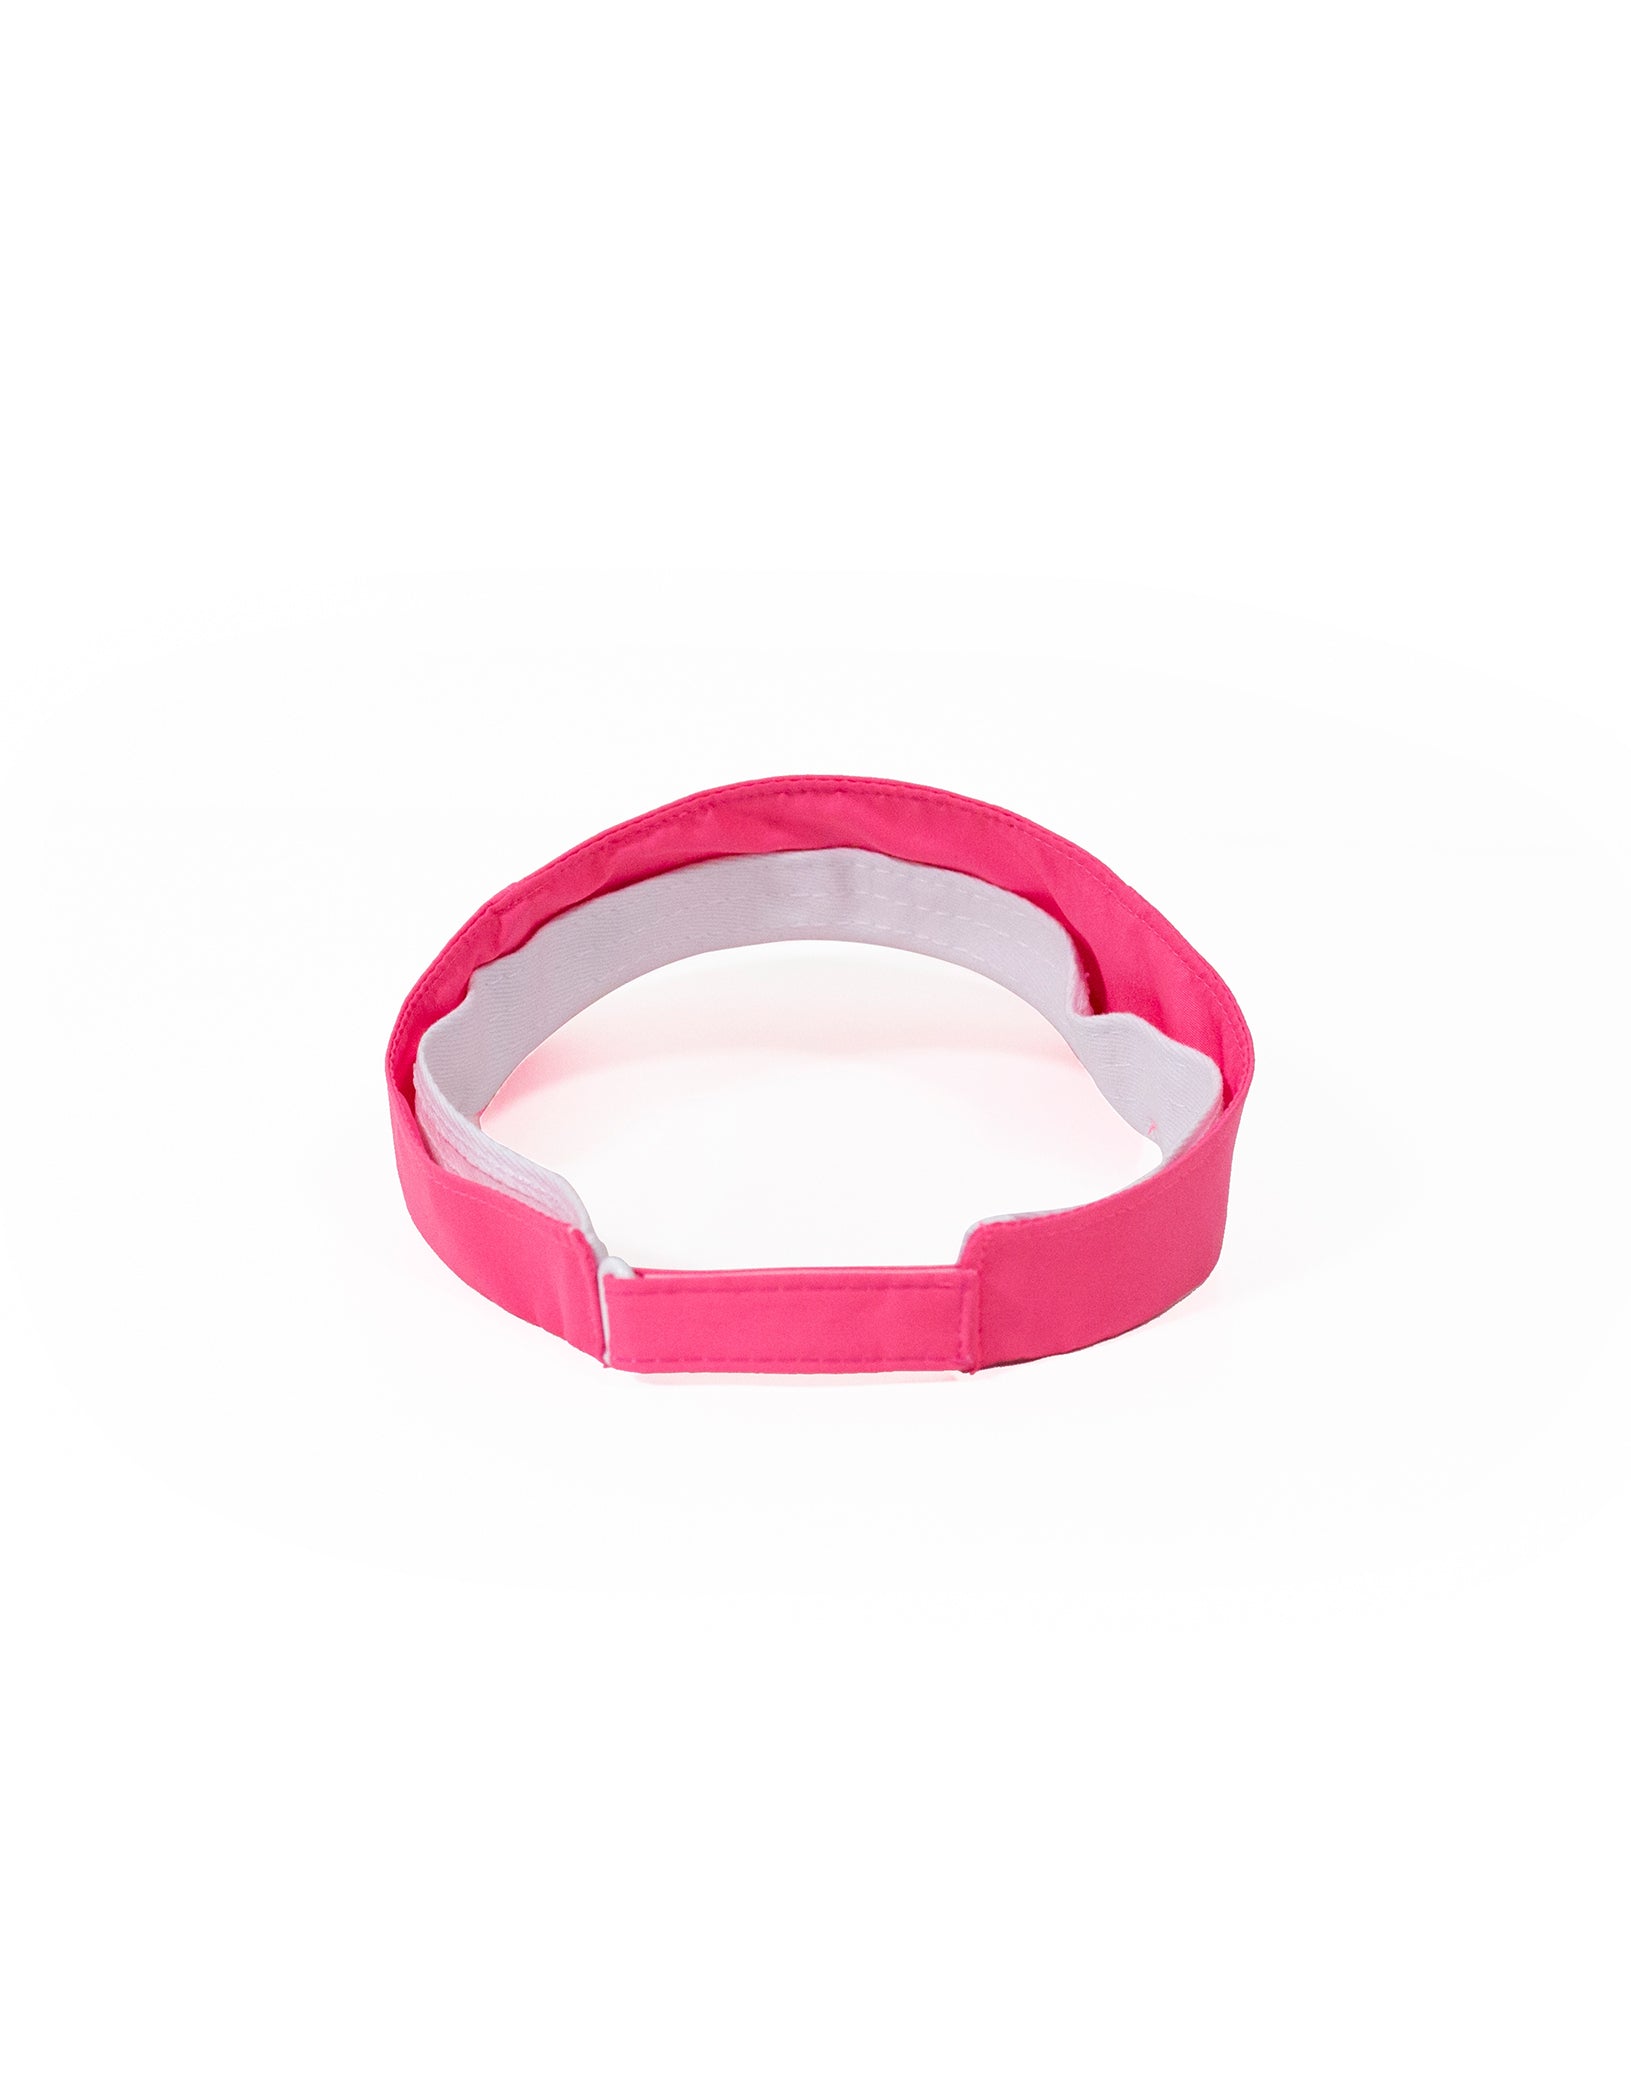 Vestem - Visor Wear Pink Neon Pink - VS18C003